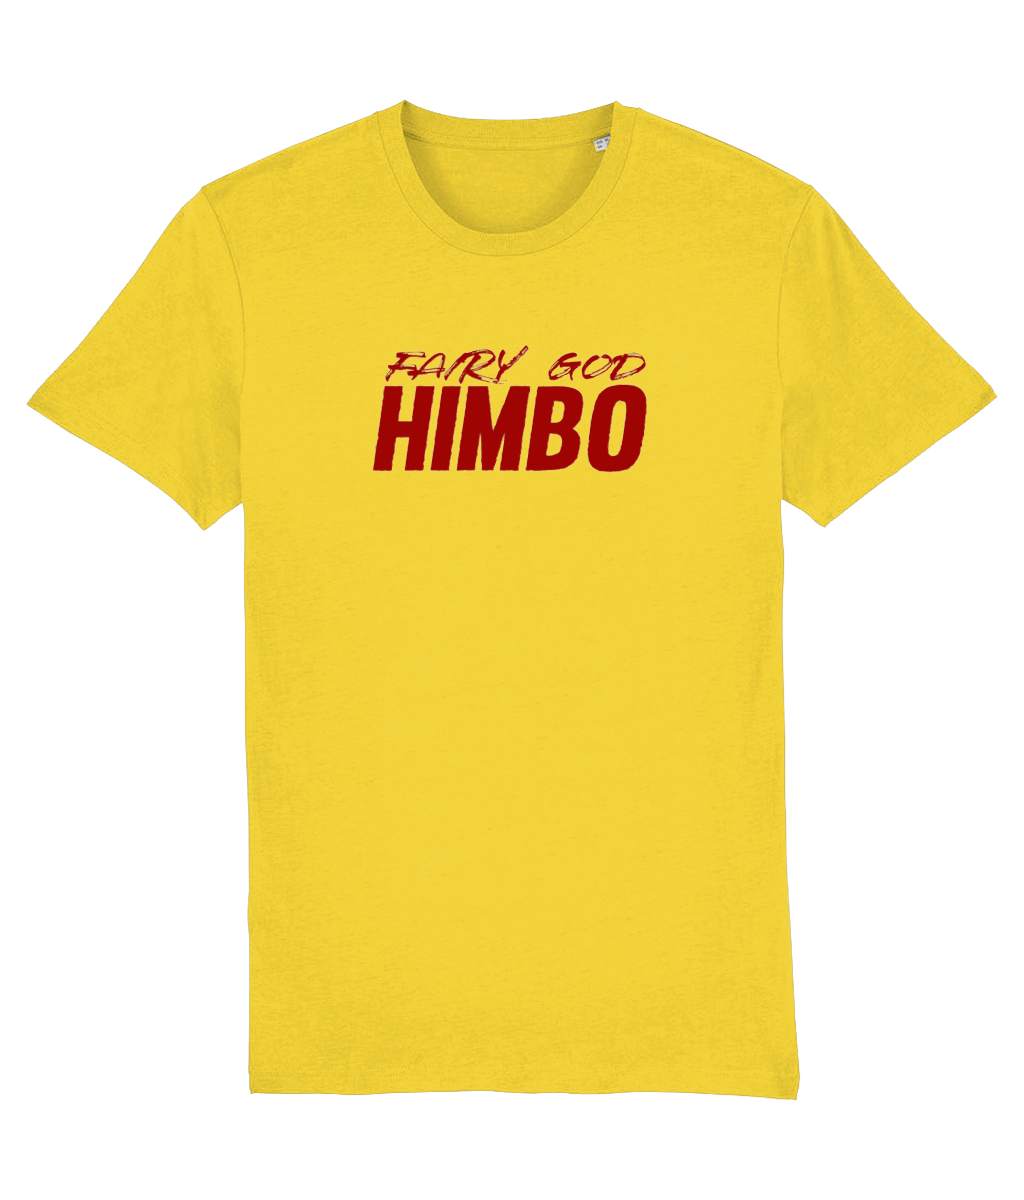 Fairy God Himbo Organic Cotton T-shirt